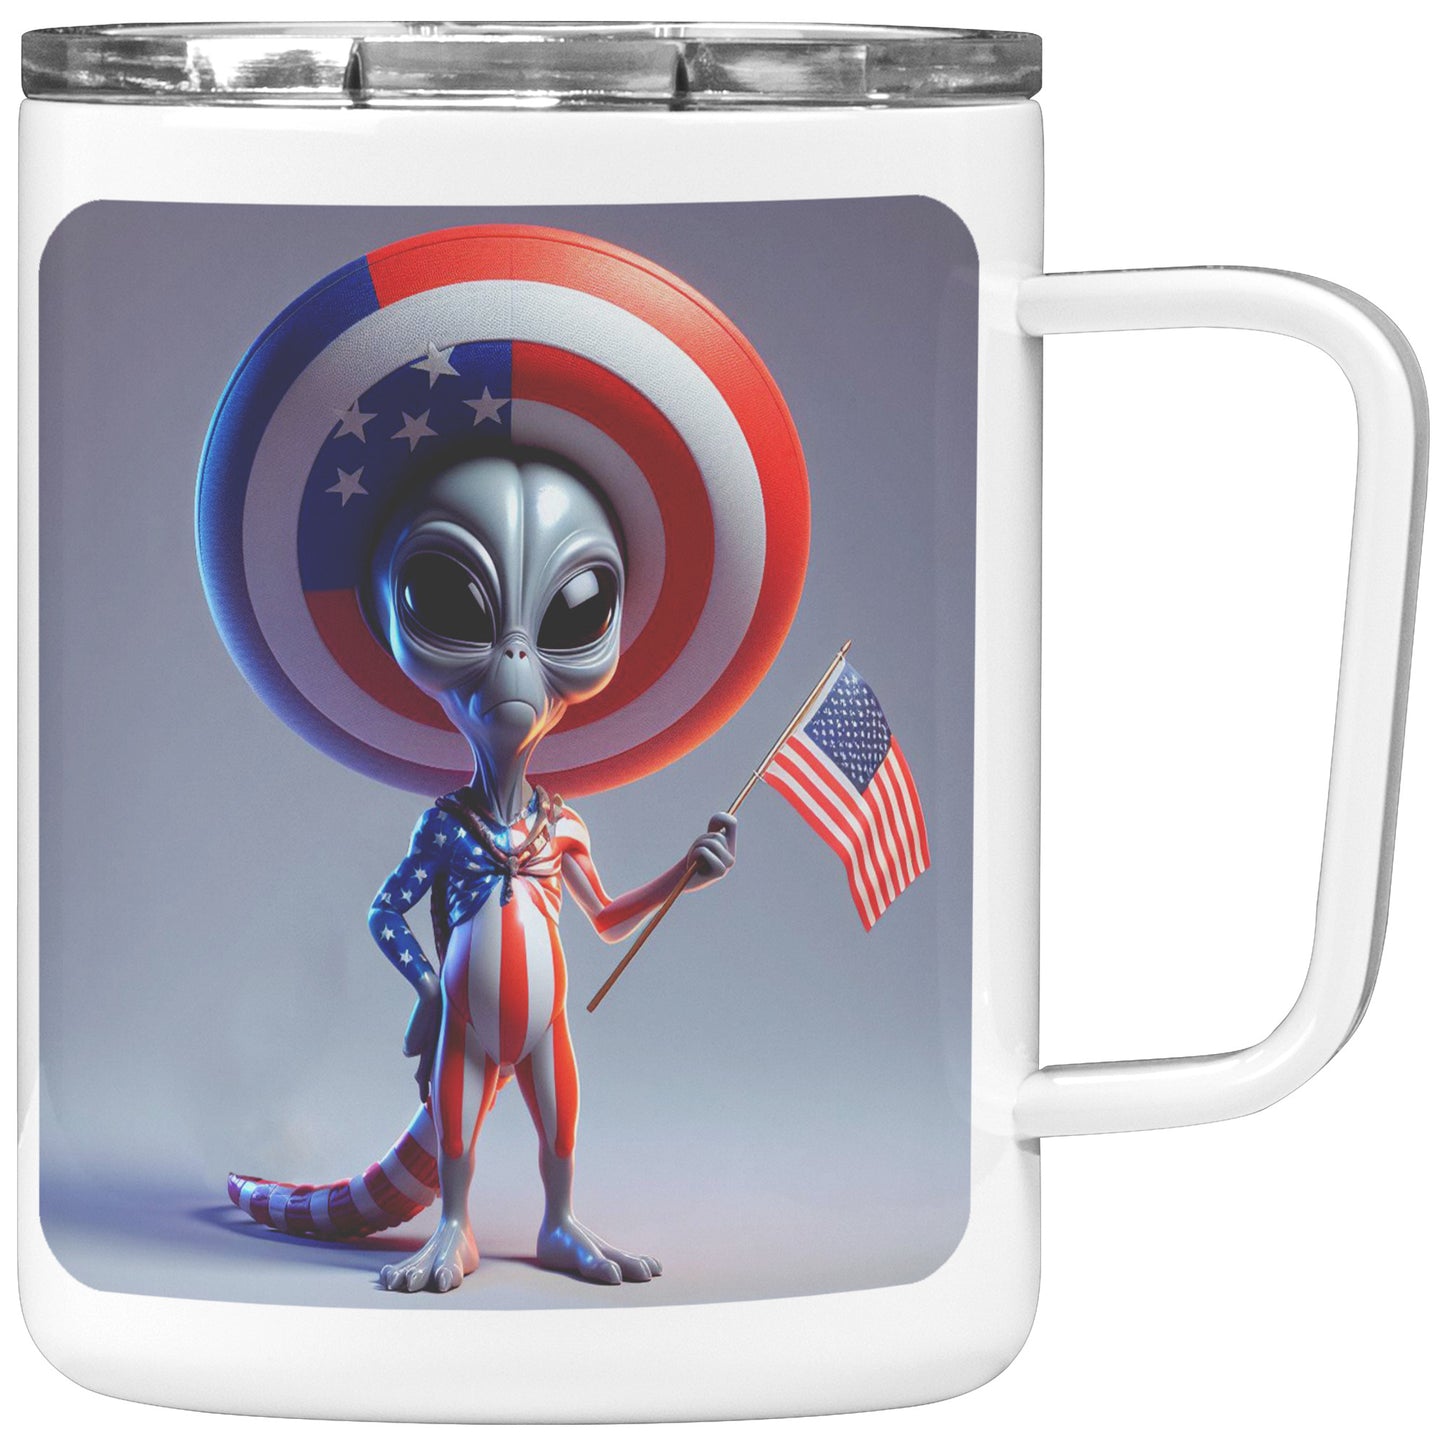 Nebulon the Grey Alien - Insulated Coffee Mug #7